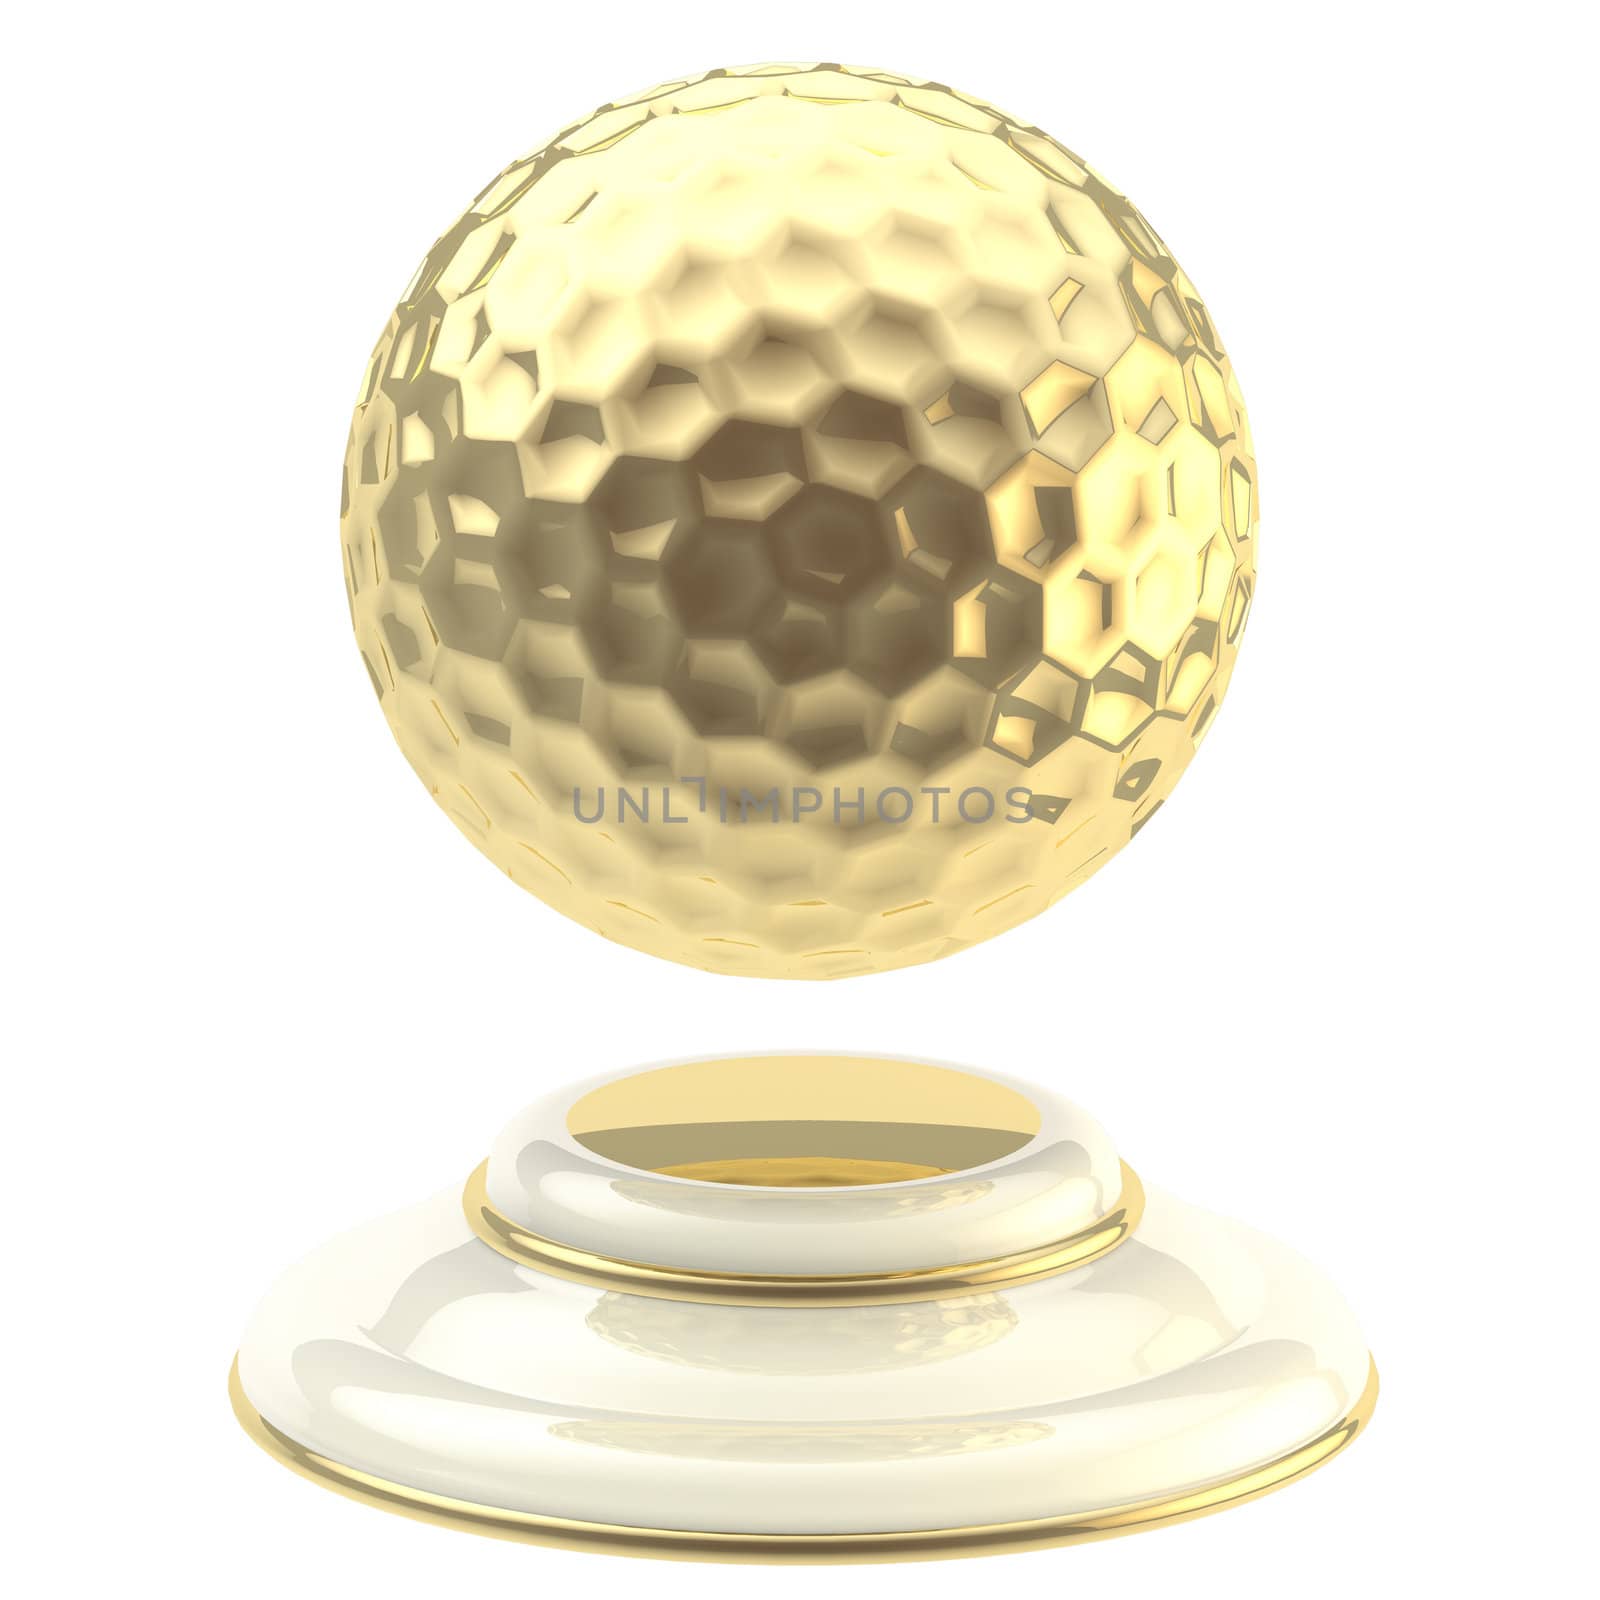 Golden golf ball champion goblet by nbvf